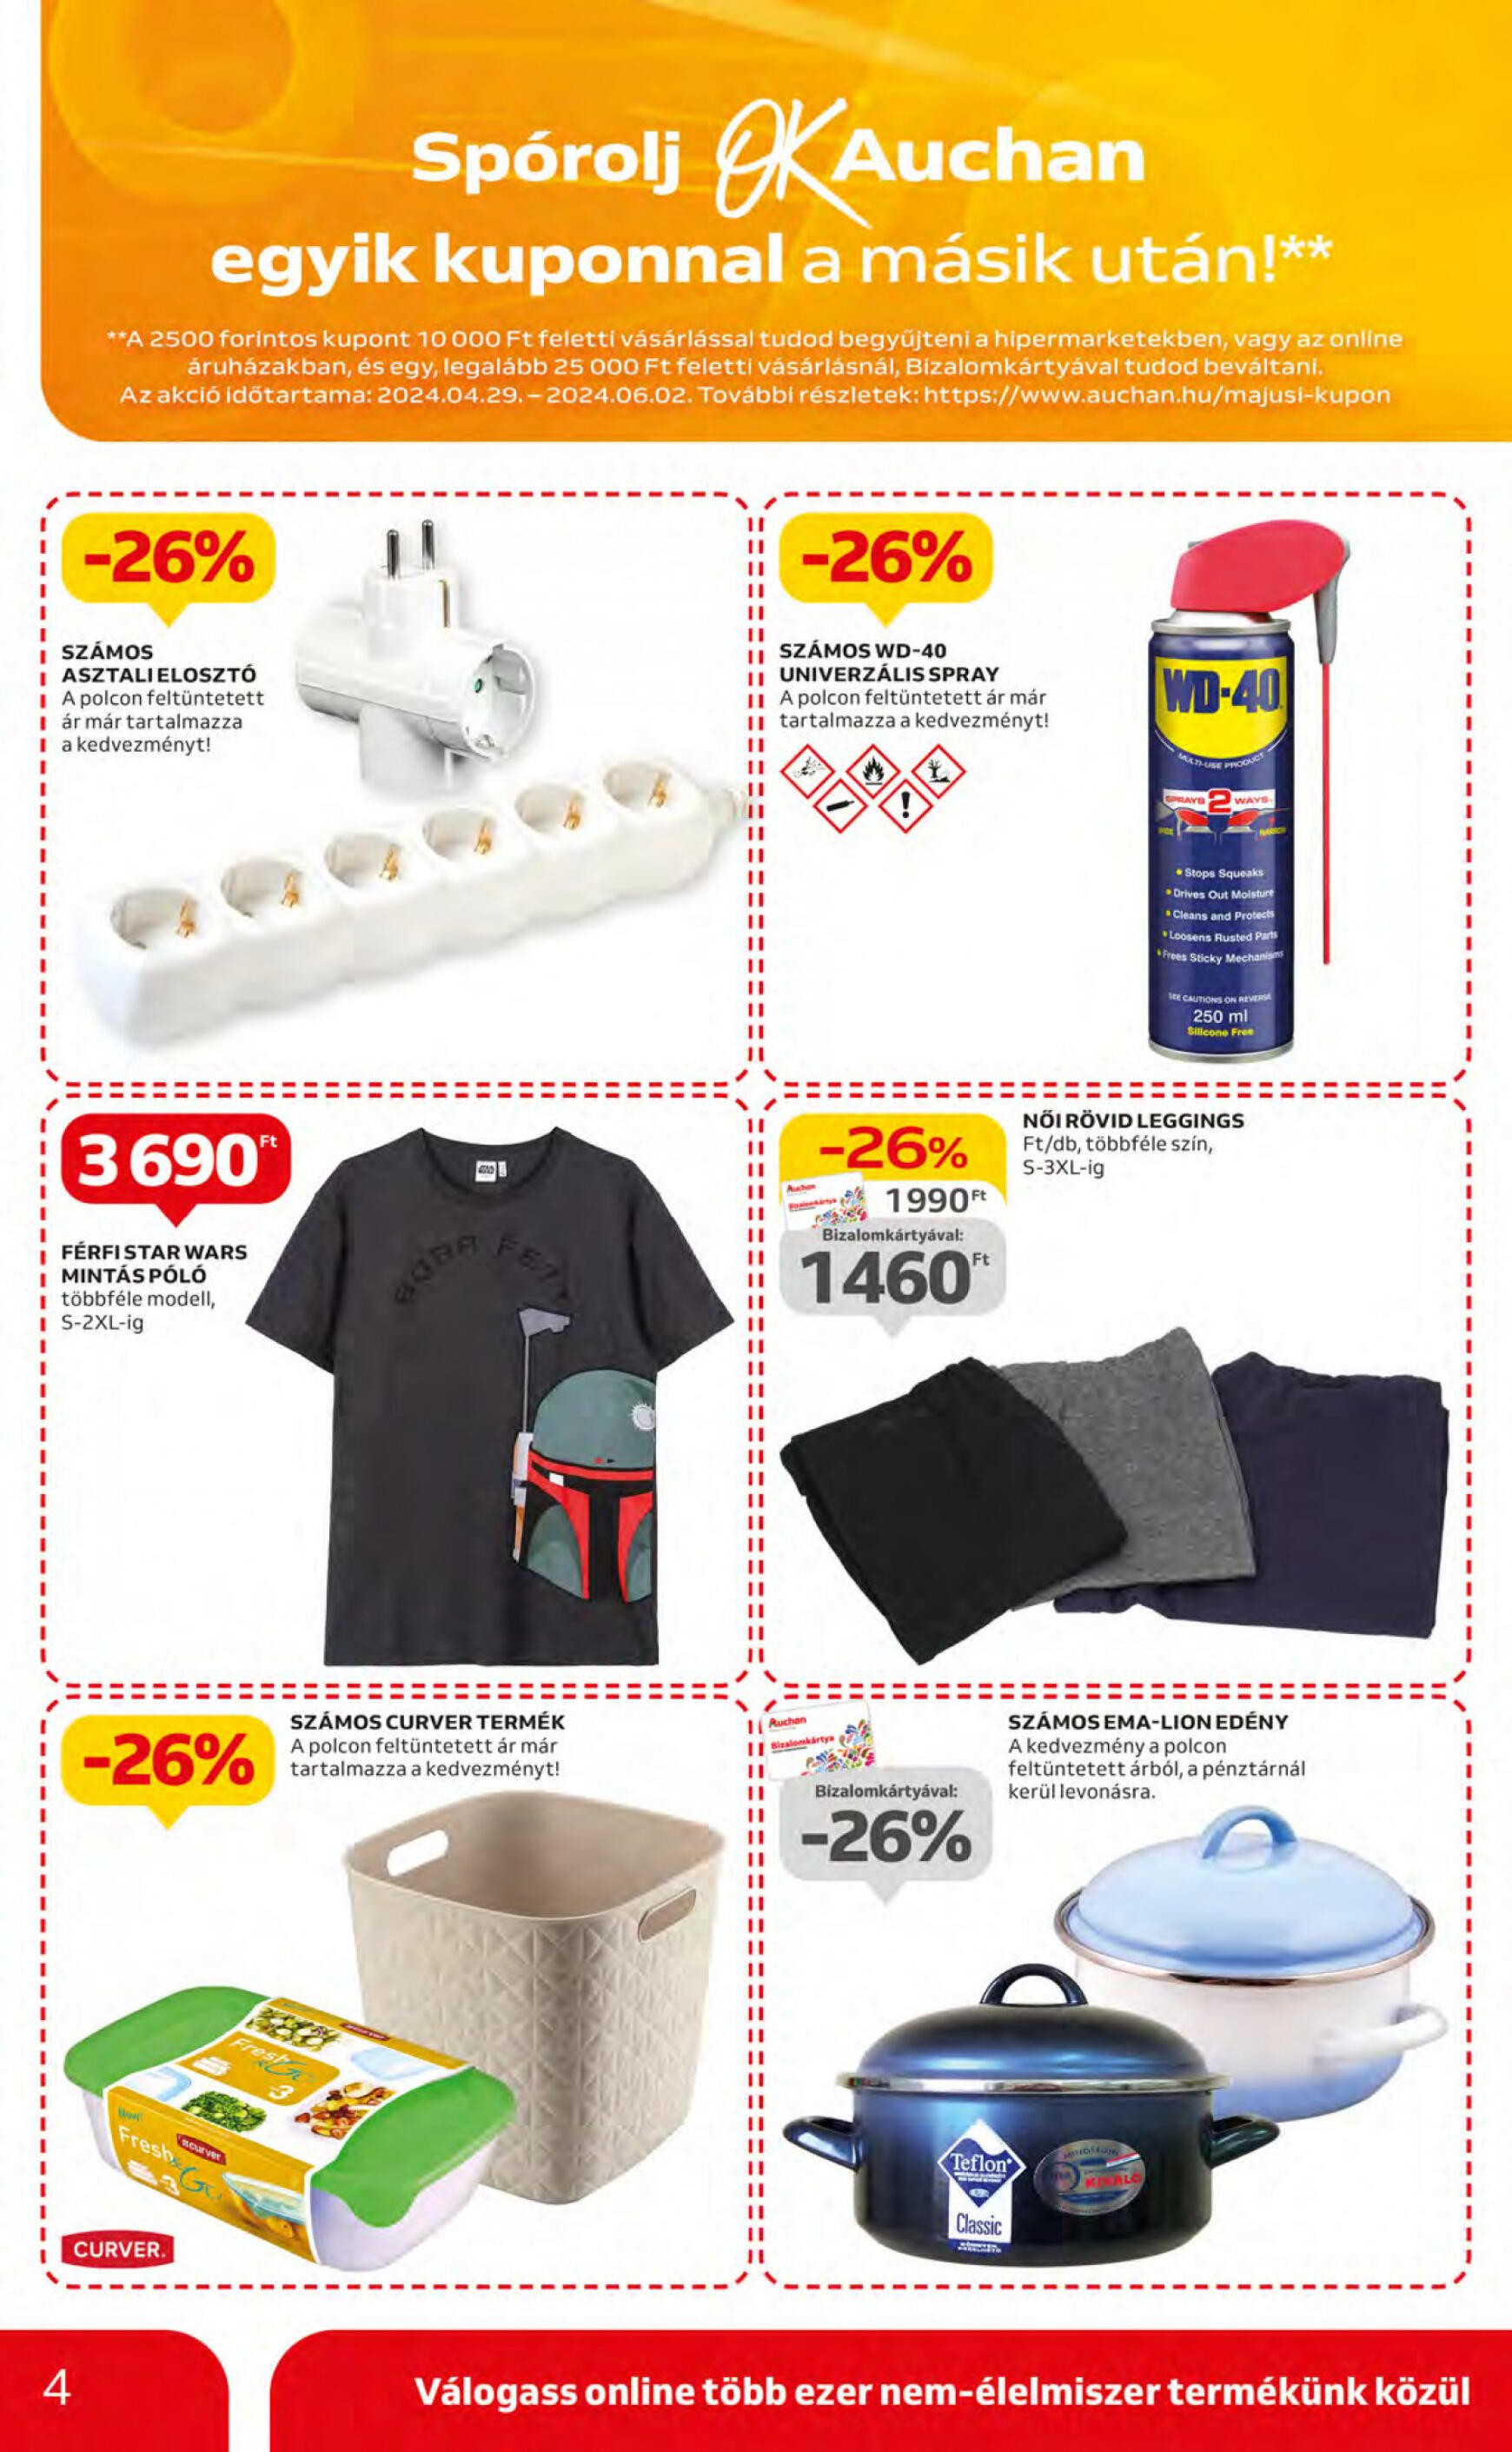 auchan - Aktuális újság Auchan 05.09. - 05.15. - page: 4